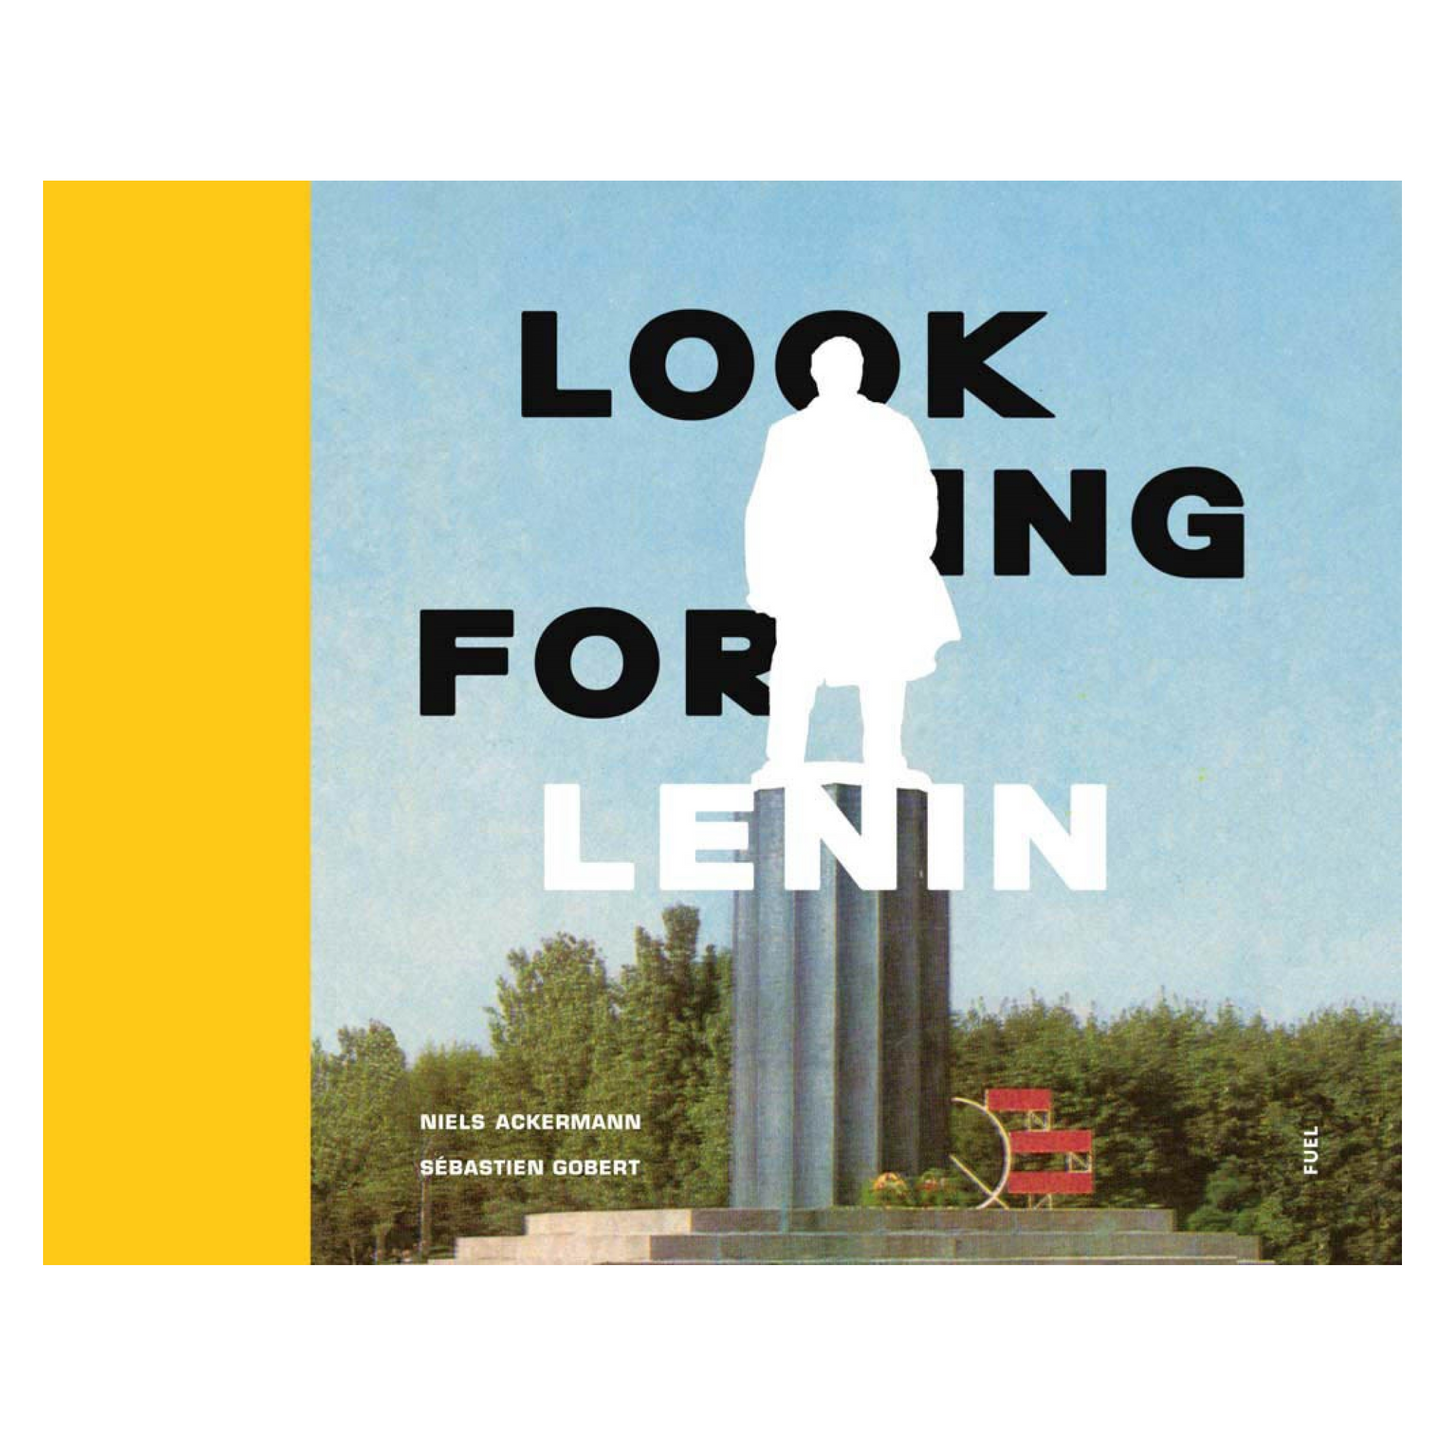 Looking For Lenin